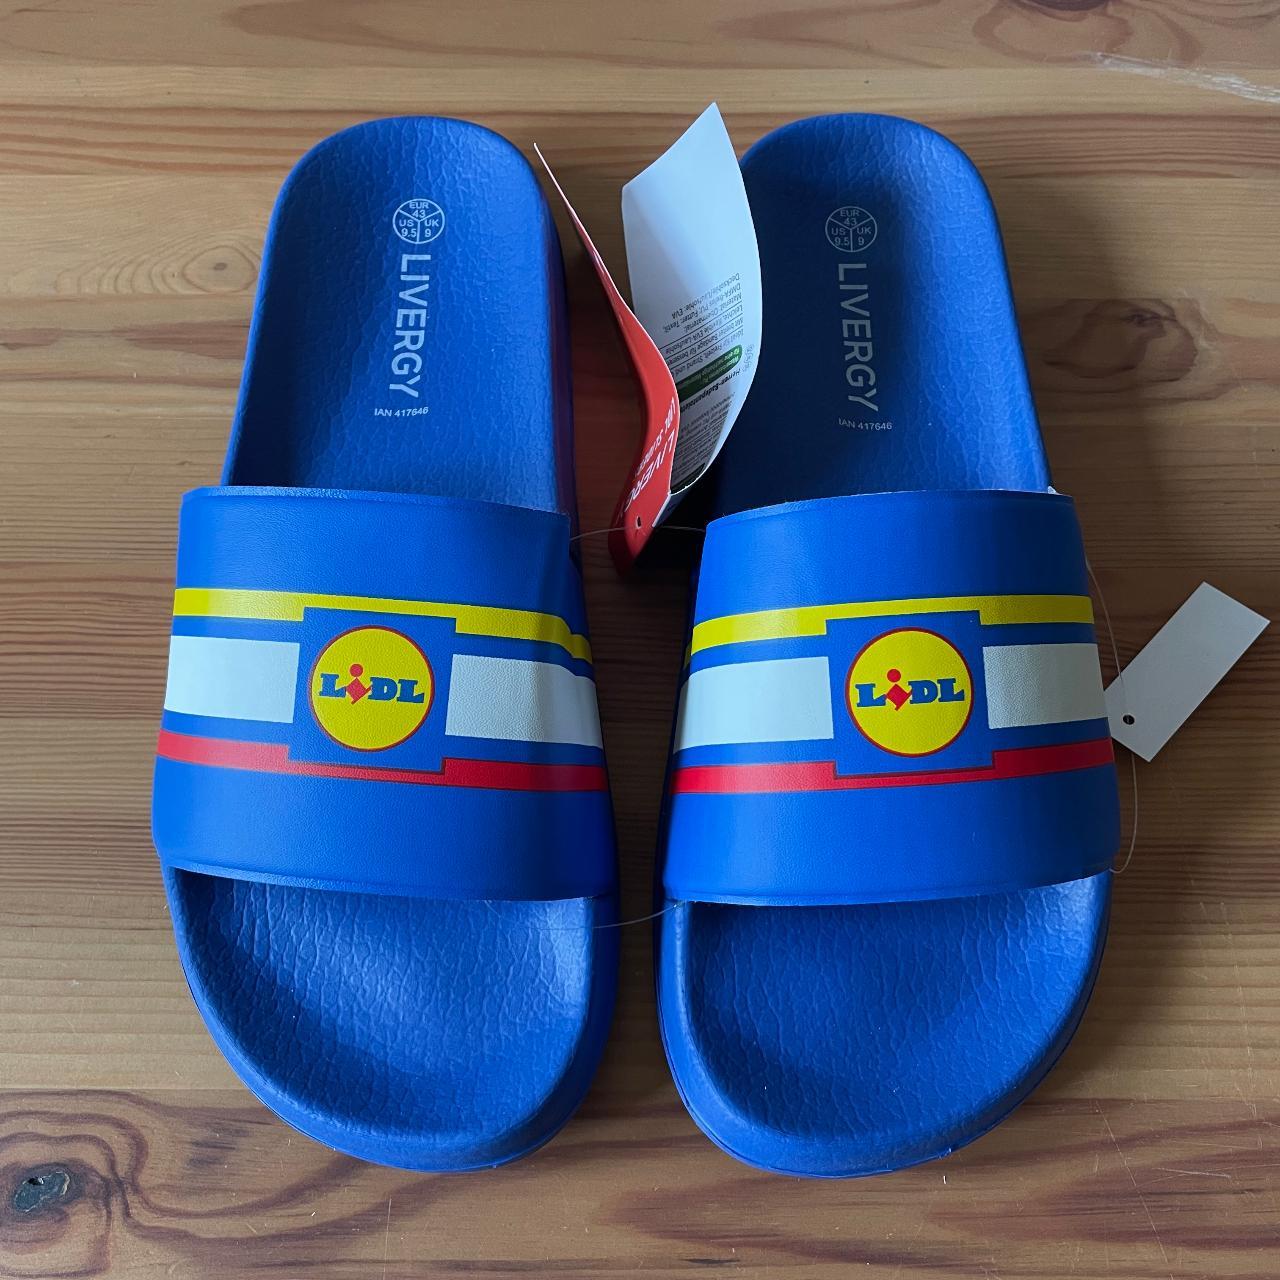 Lidl Sliders Adult Shoes Size 9 UK 43 EU Rare... - Depop